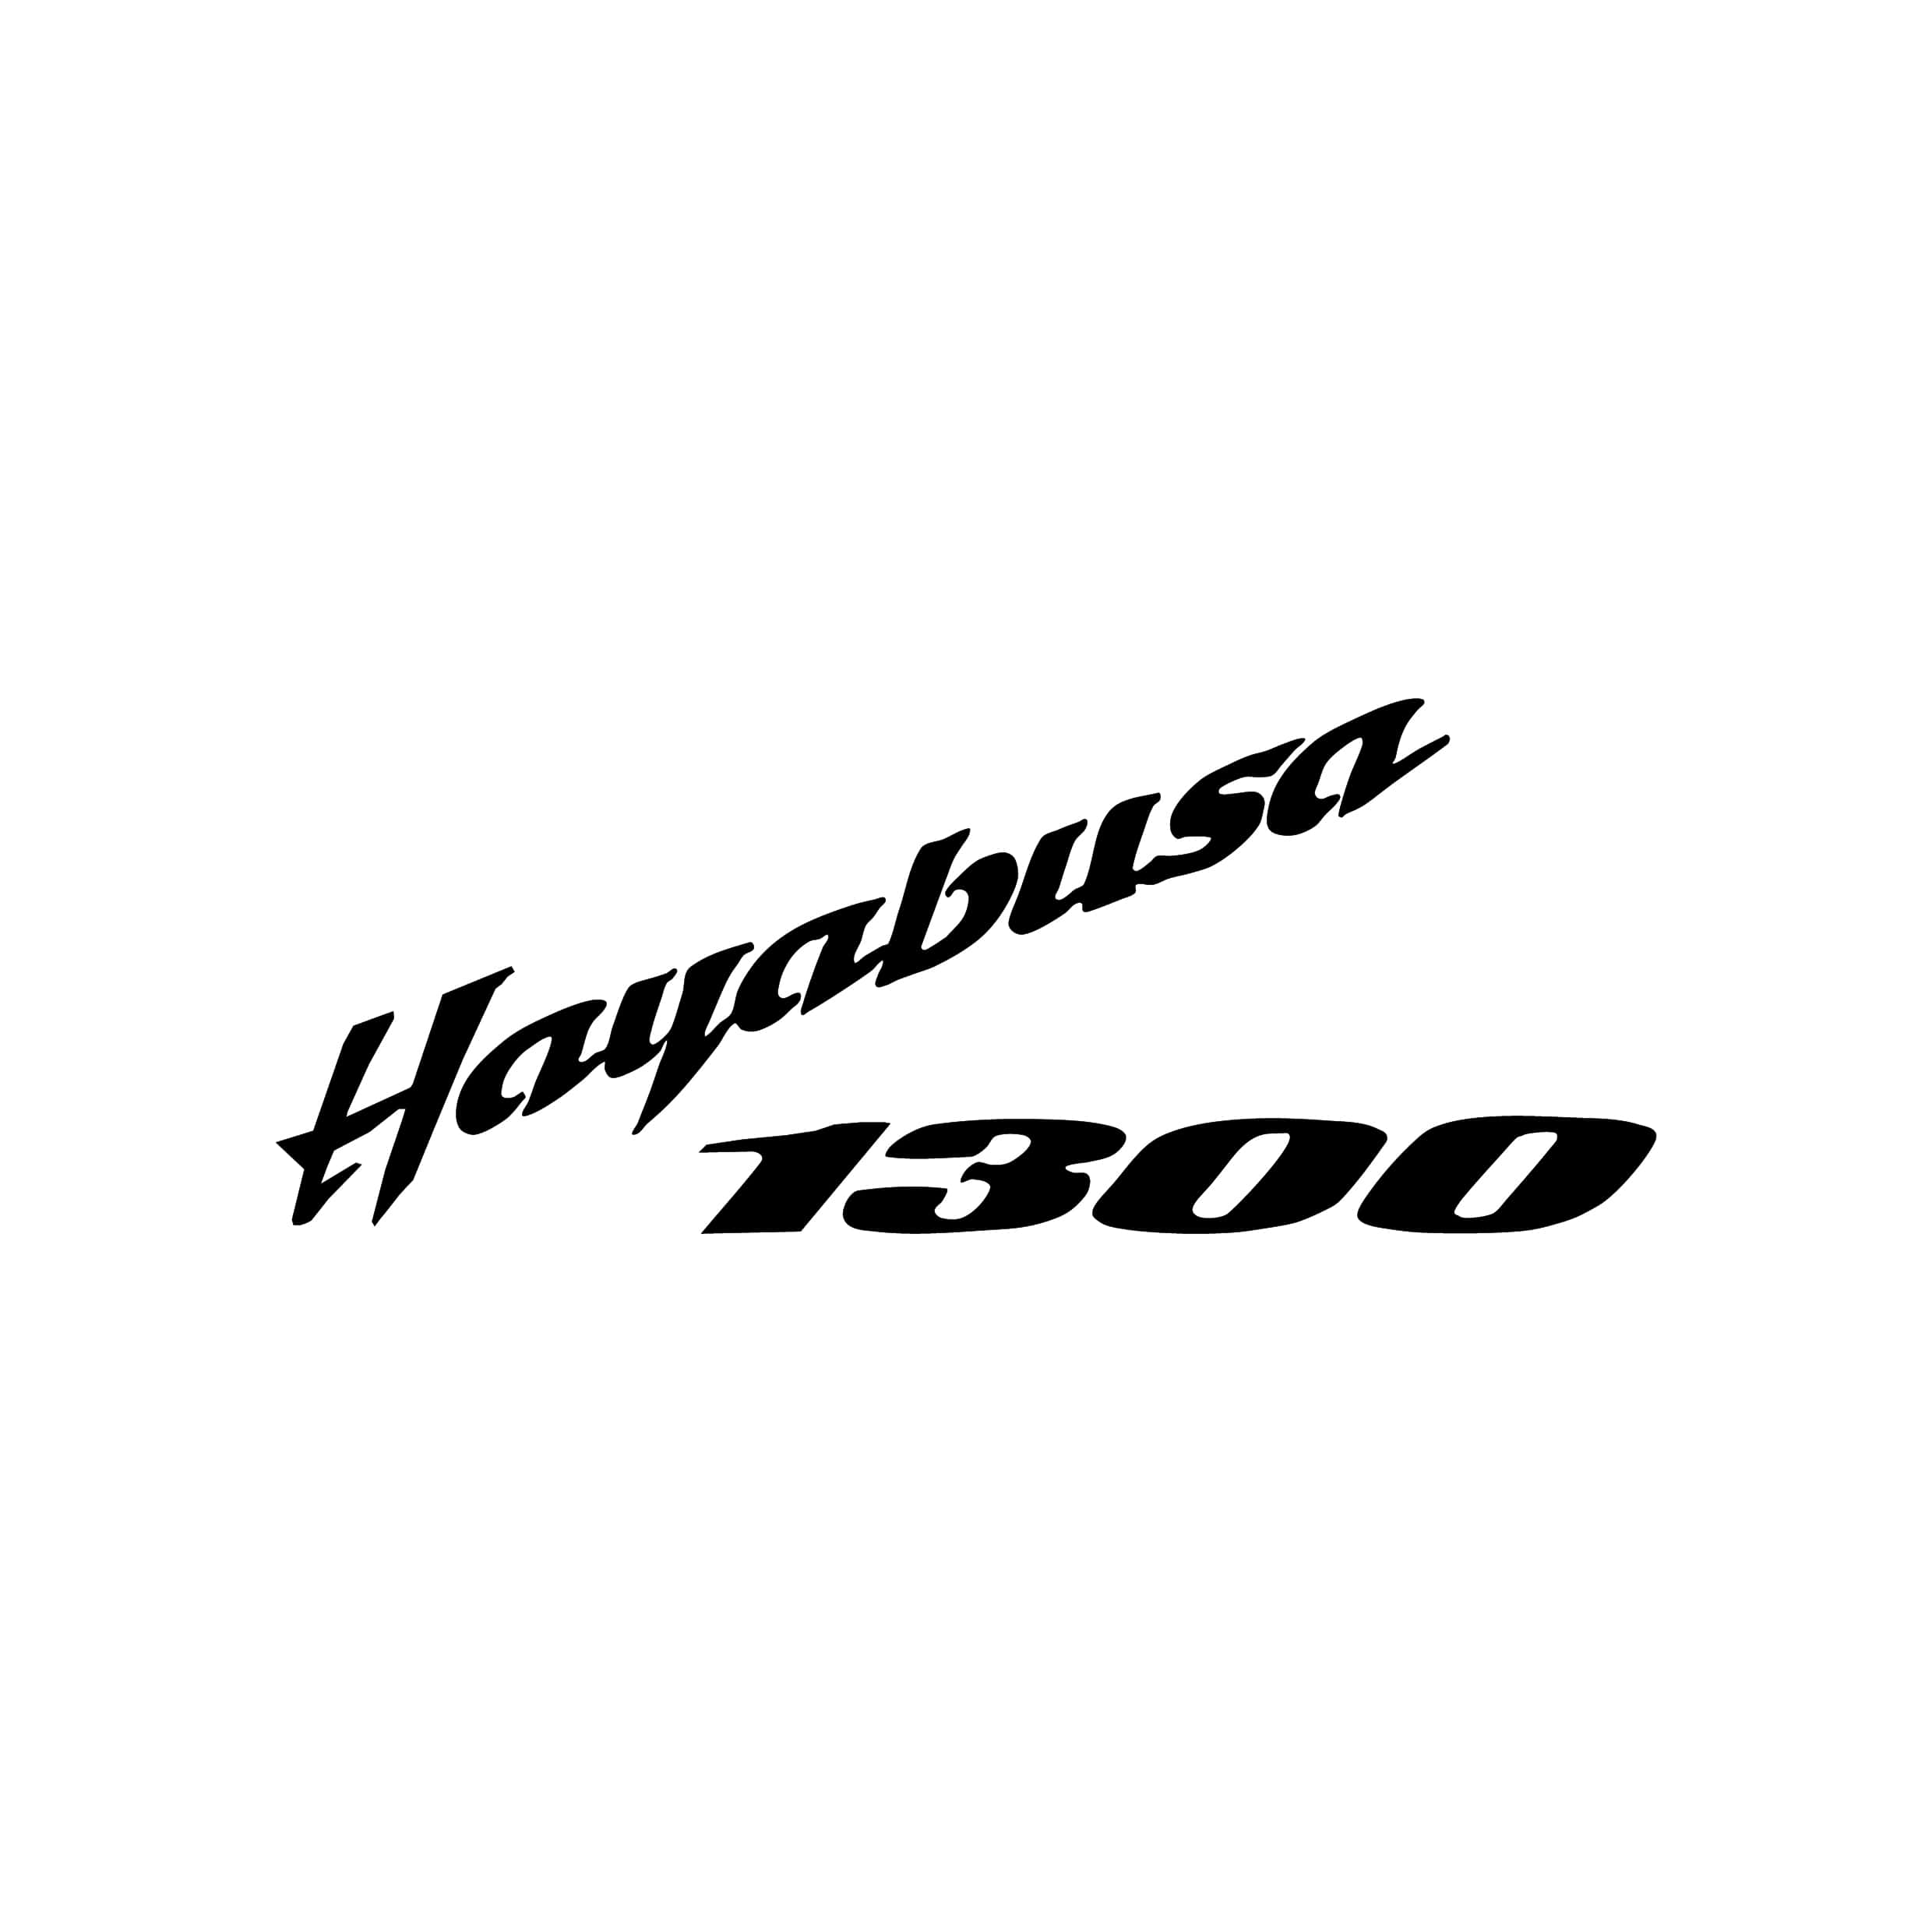 stickers-hayabusa-1300-suzuki-ref50-autocollant-moto-sticker-deux-roue-autocollants-decals-sponsors-tuning-sport-logo-bike-scooter-min